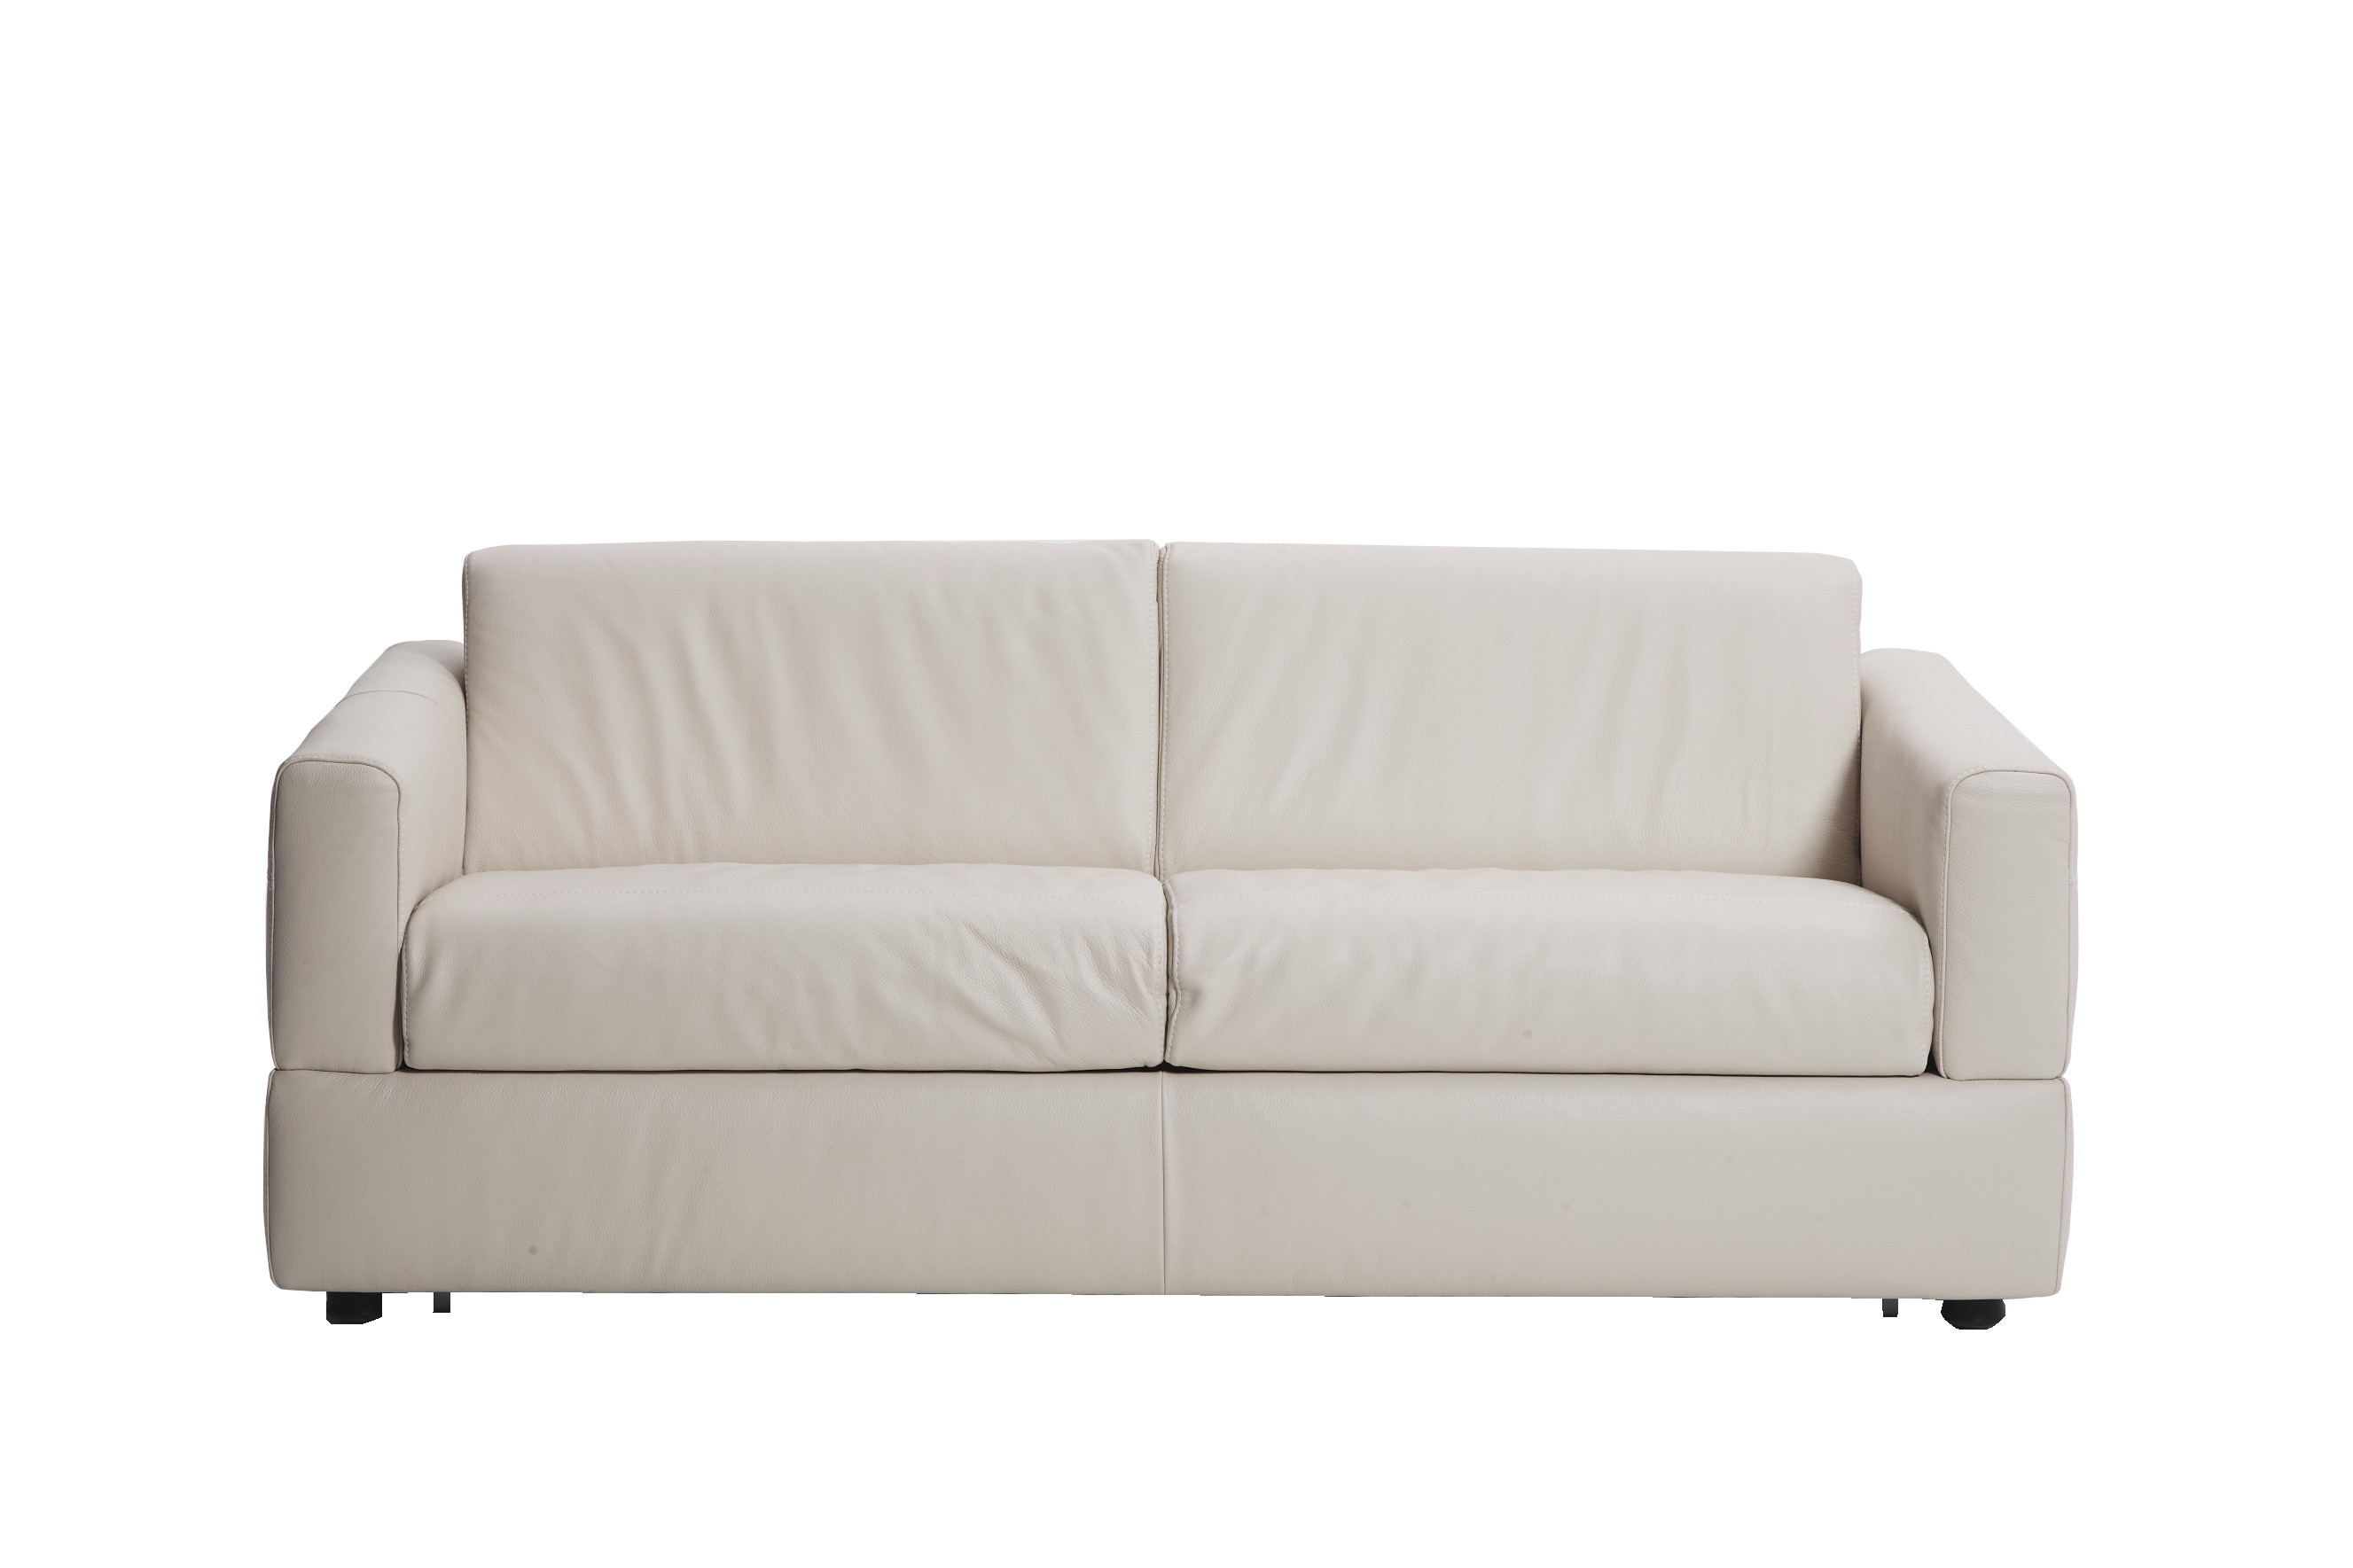 Visconti Leather Sofa Bed White